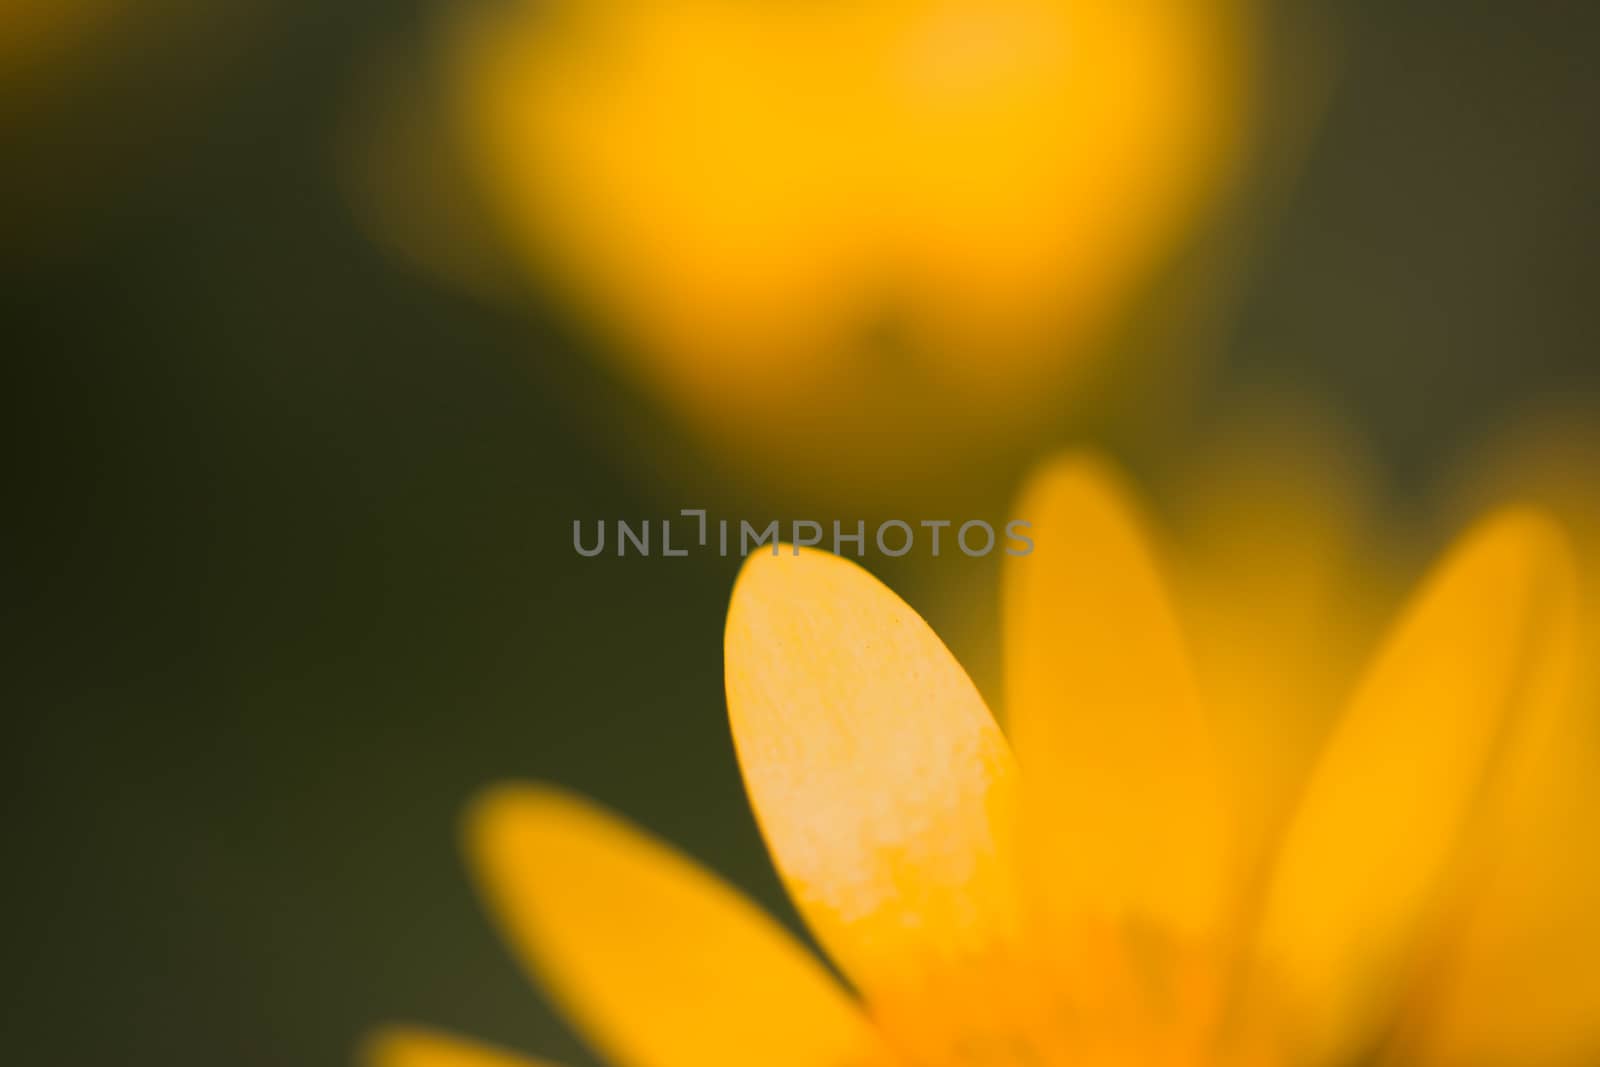 Abstract yellow flower macro shot